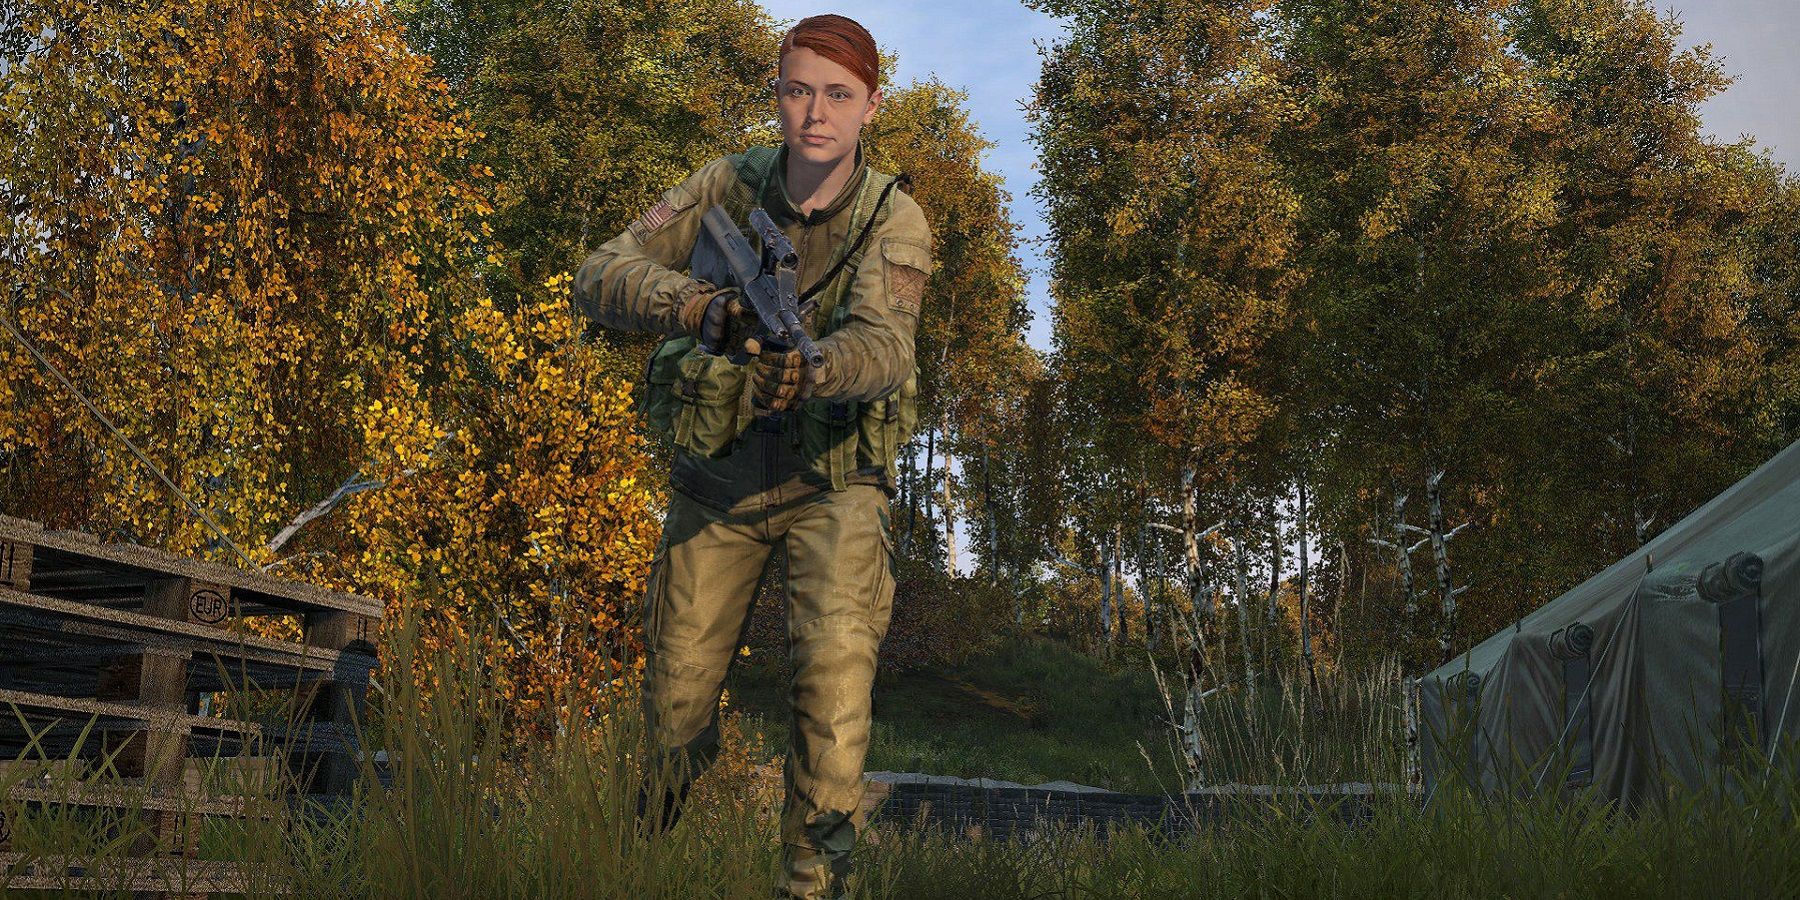 Screenshot from DayZ showing a female character running across a field.